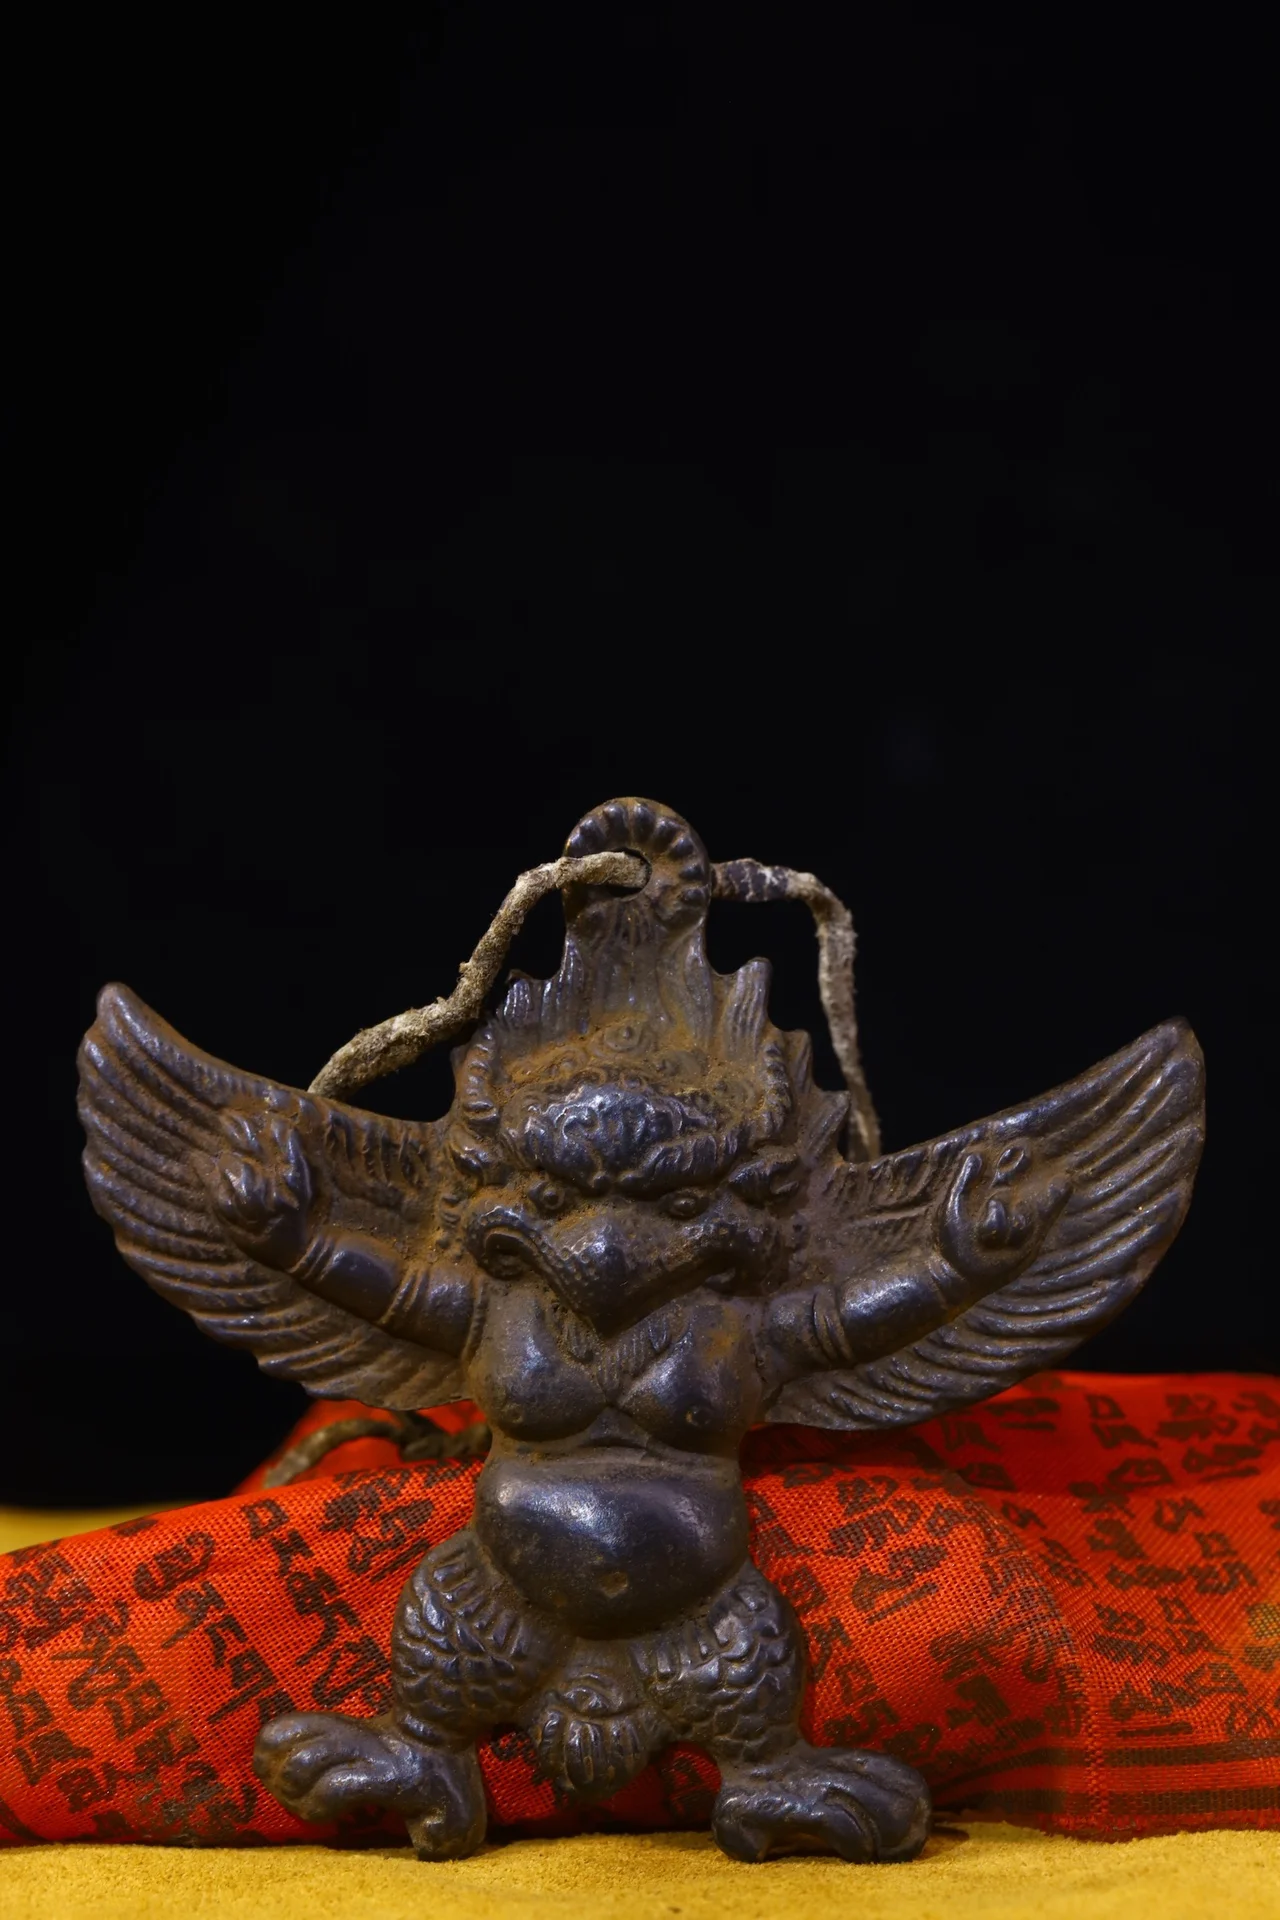 

4"Tibetan Temple Collection Old Bronze Cinnabar Garuda Buddha protector Amulet pendant Town house Exorcism ward off evil spirits